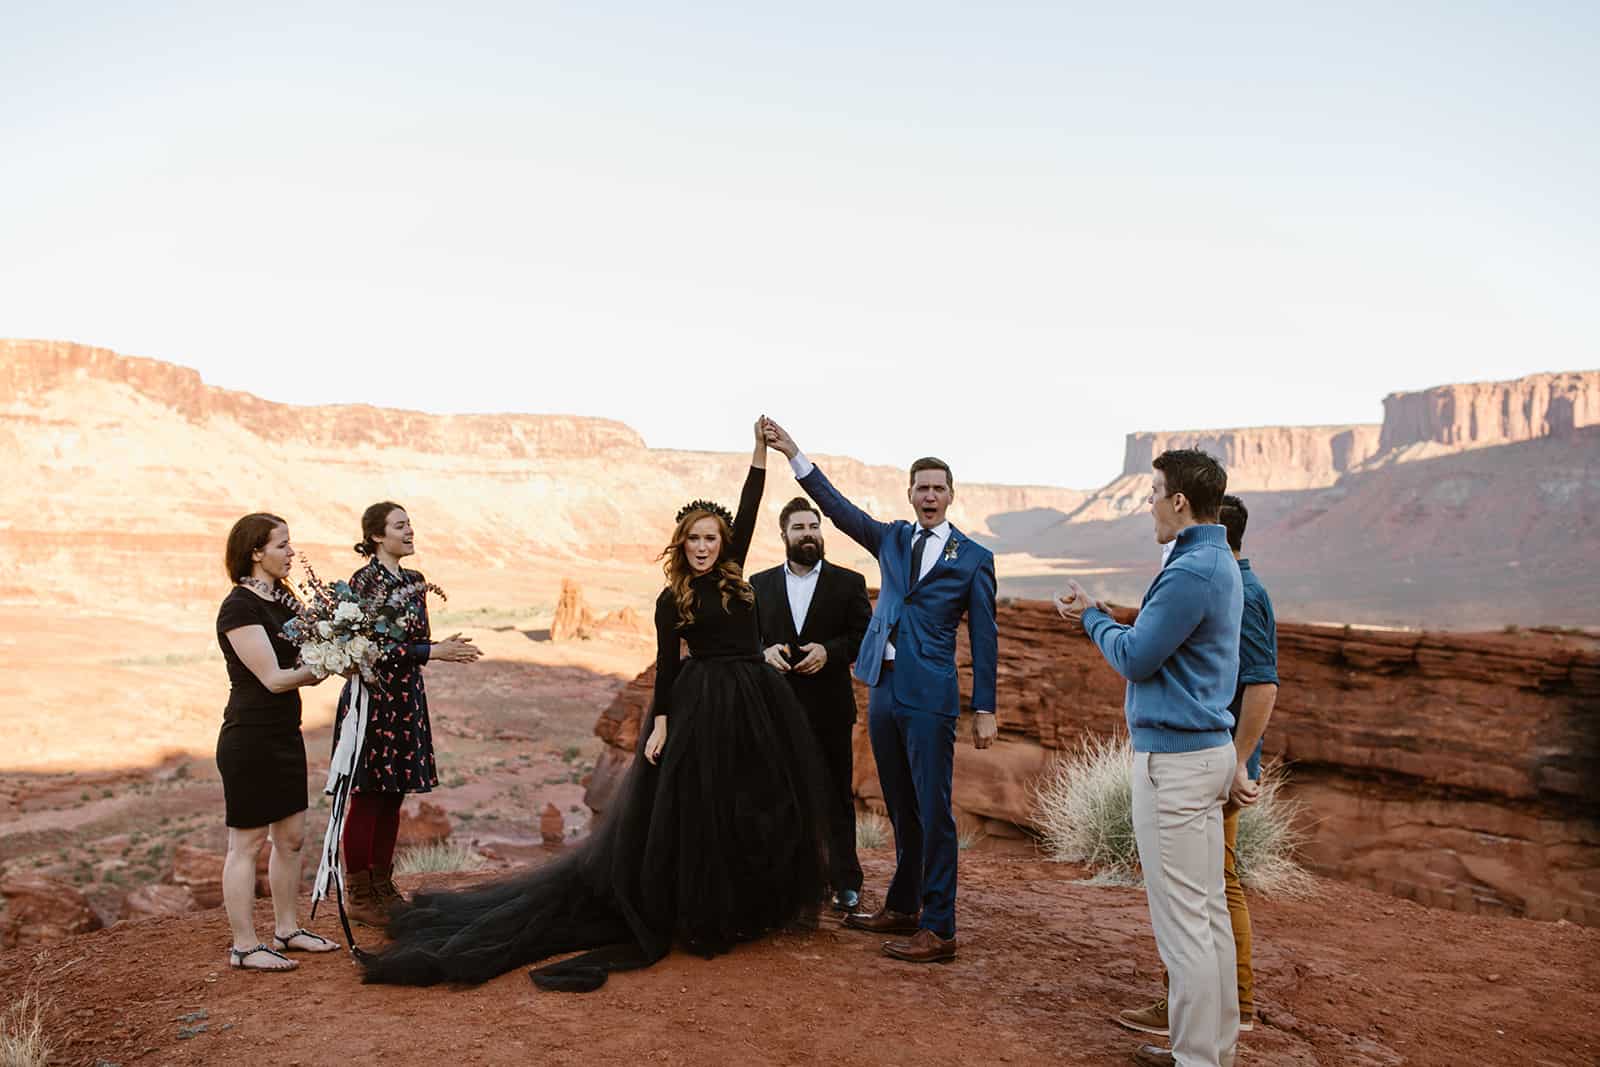 Yosemite National Park Moab Utah Weddings and Desert Elopements The Hearnes Adventure Elopement Photographers 3